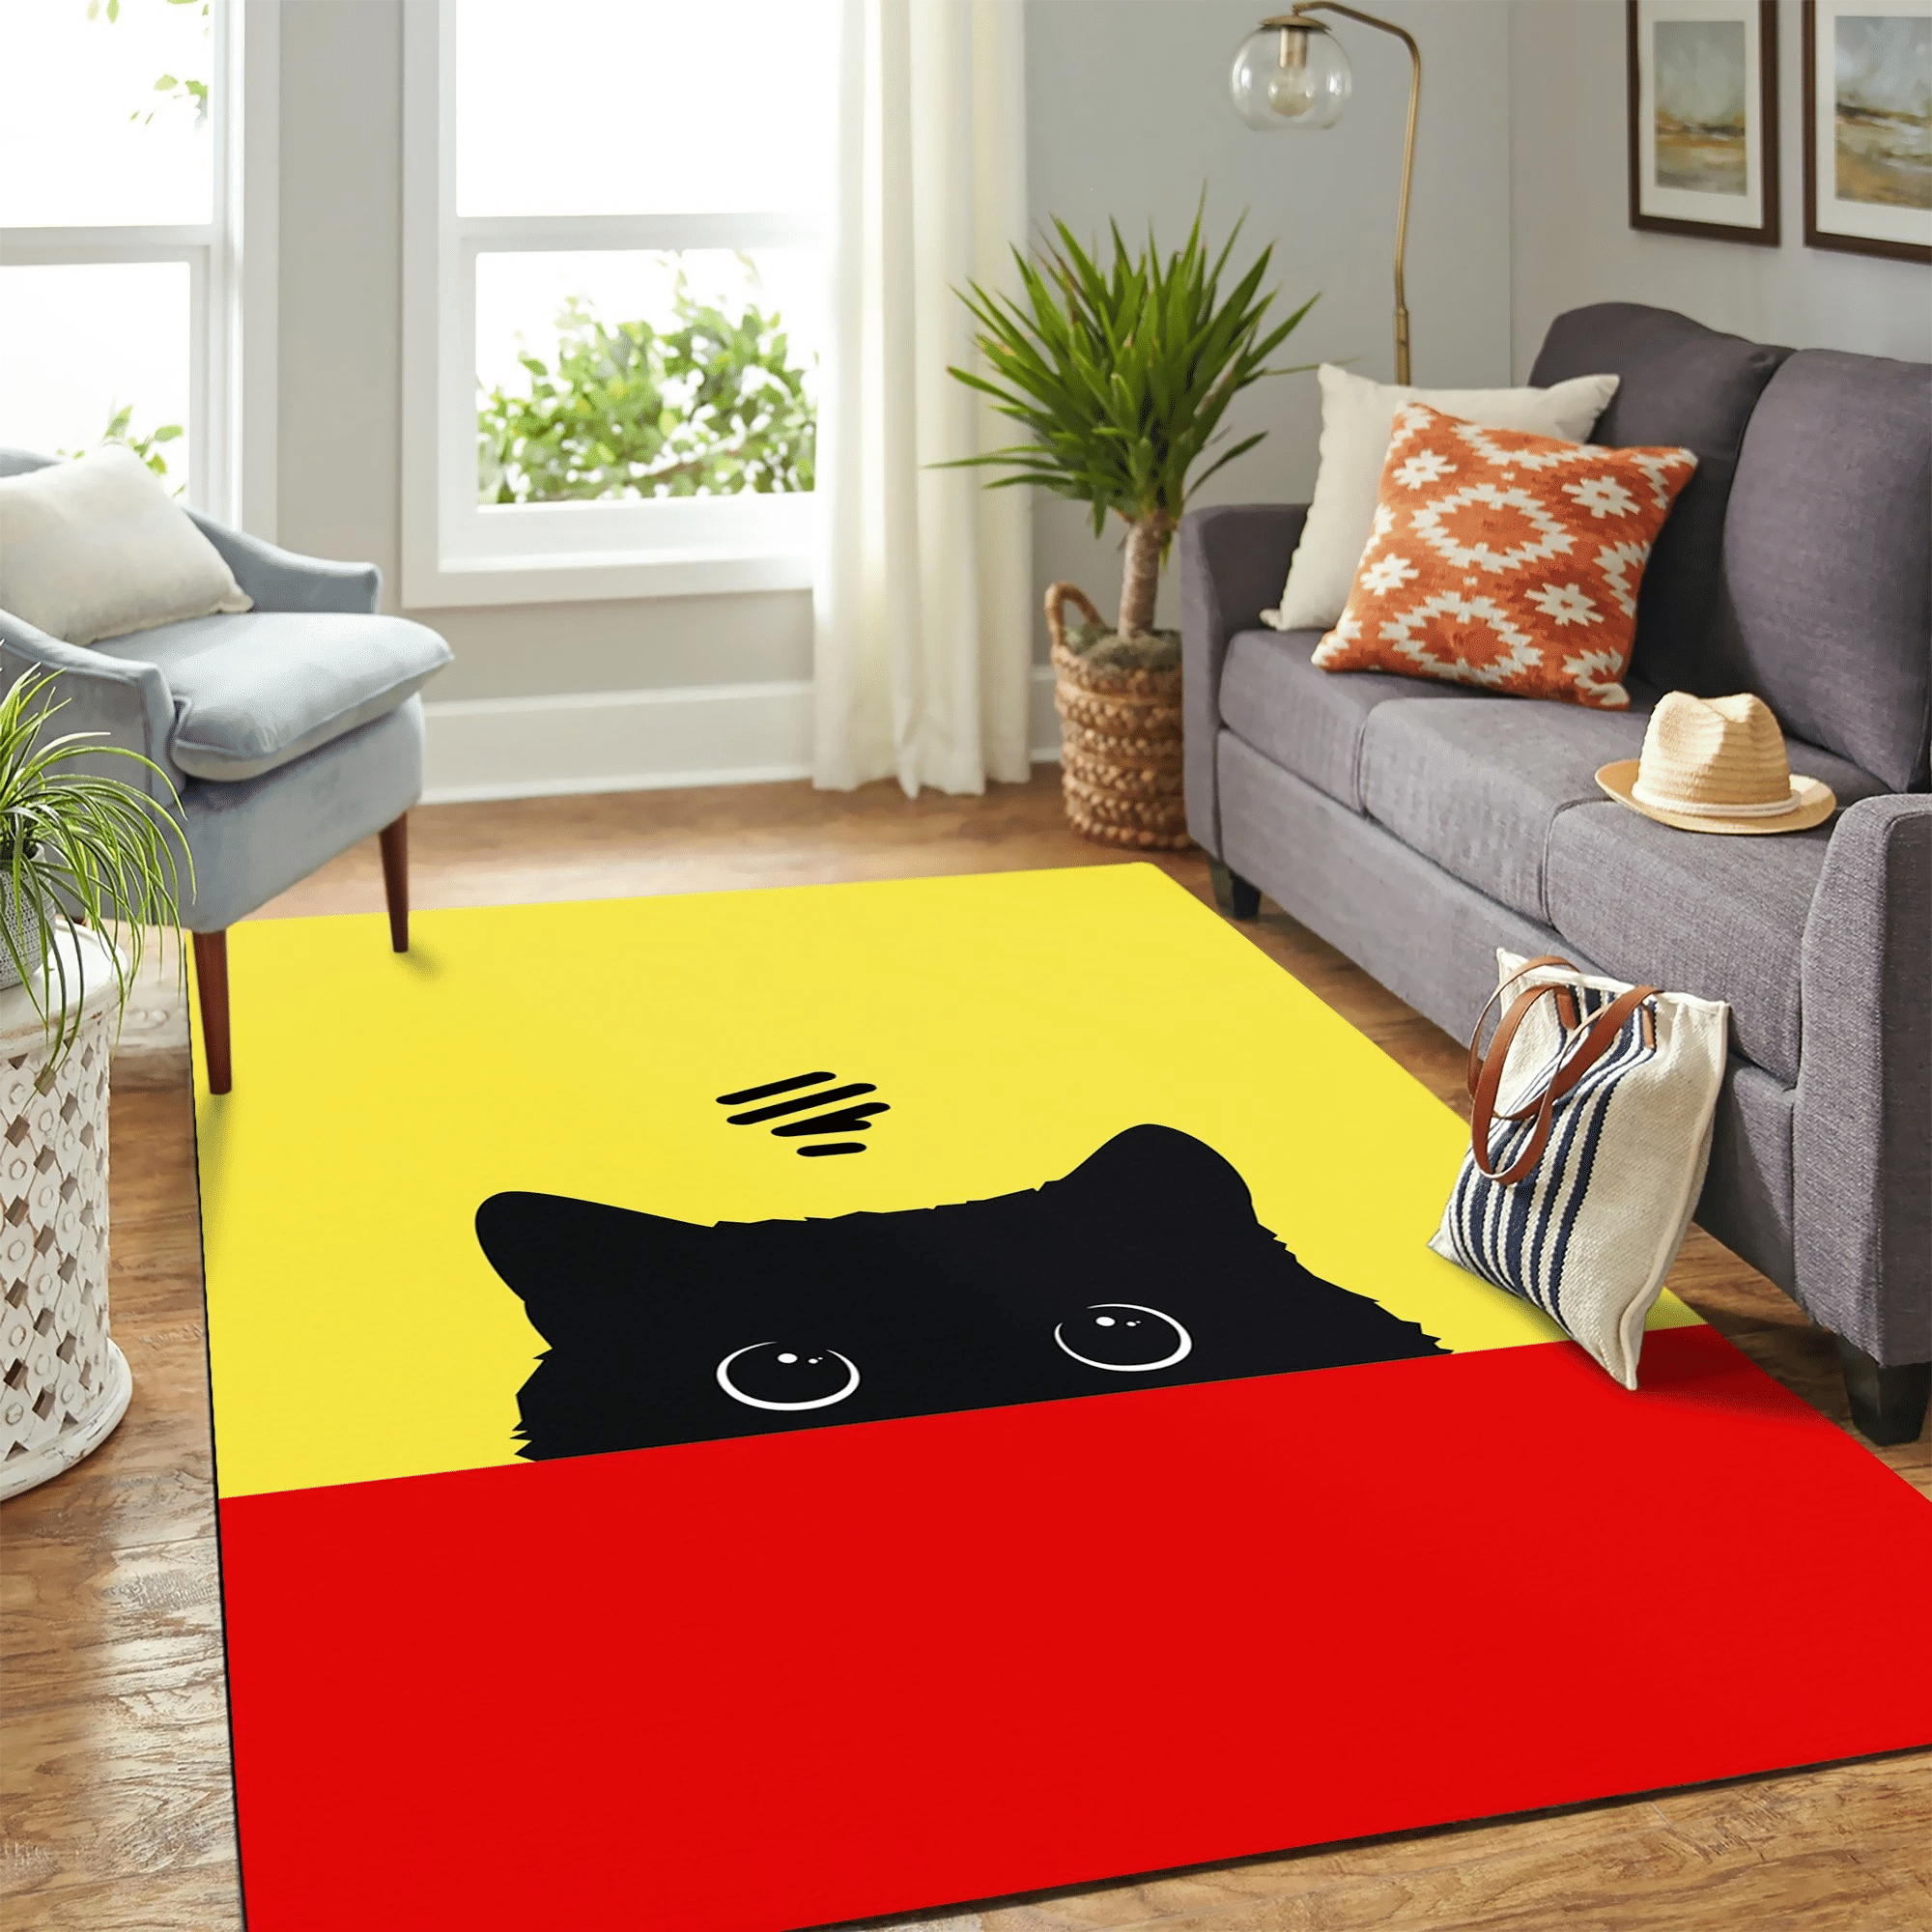 Cute Black Cat Carpet Rug Chrismas Gift - Indoor Outdoor Rugs